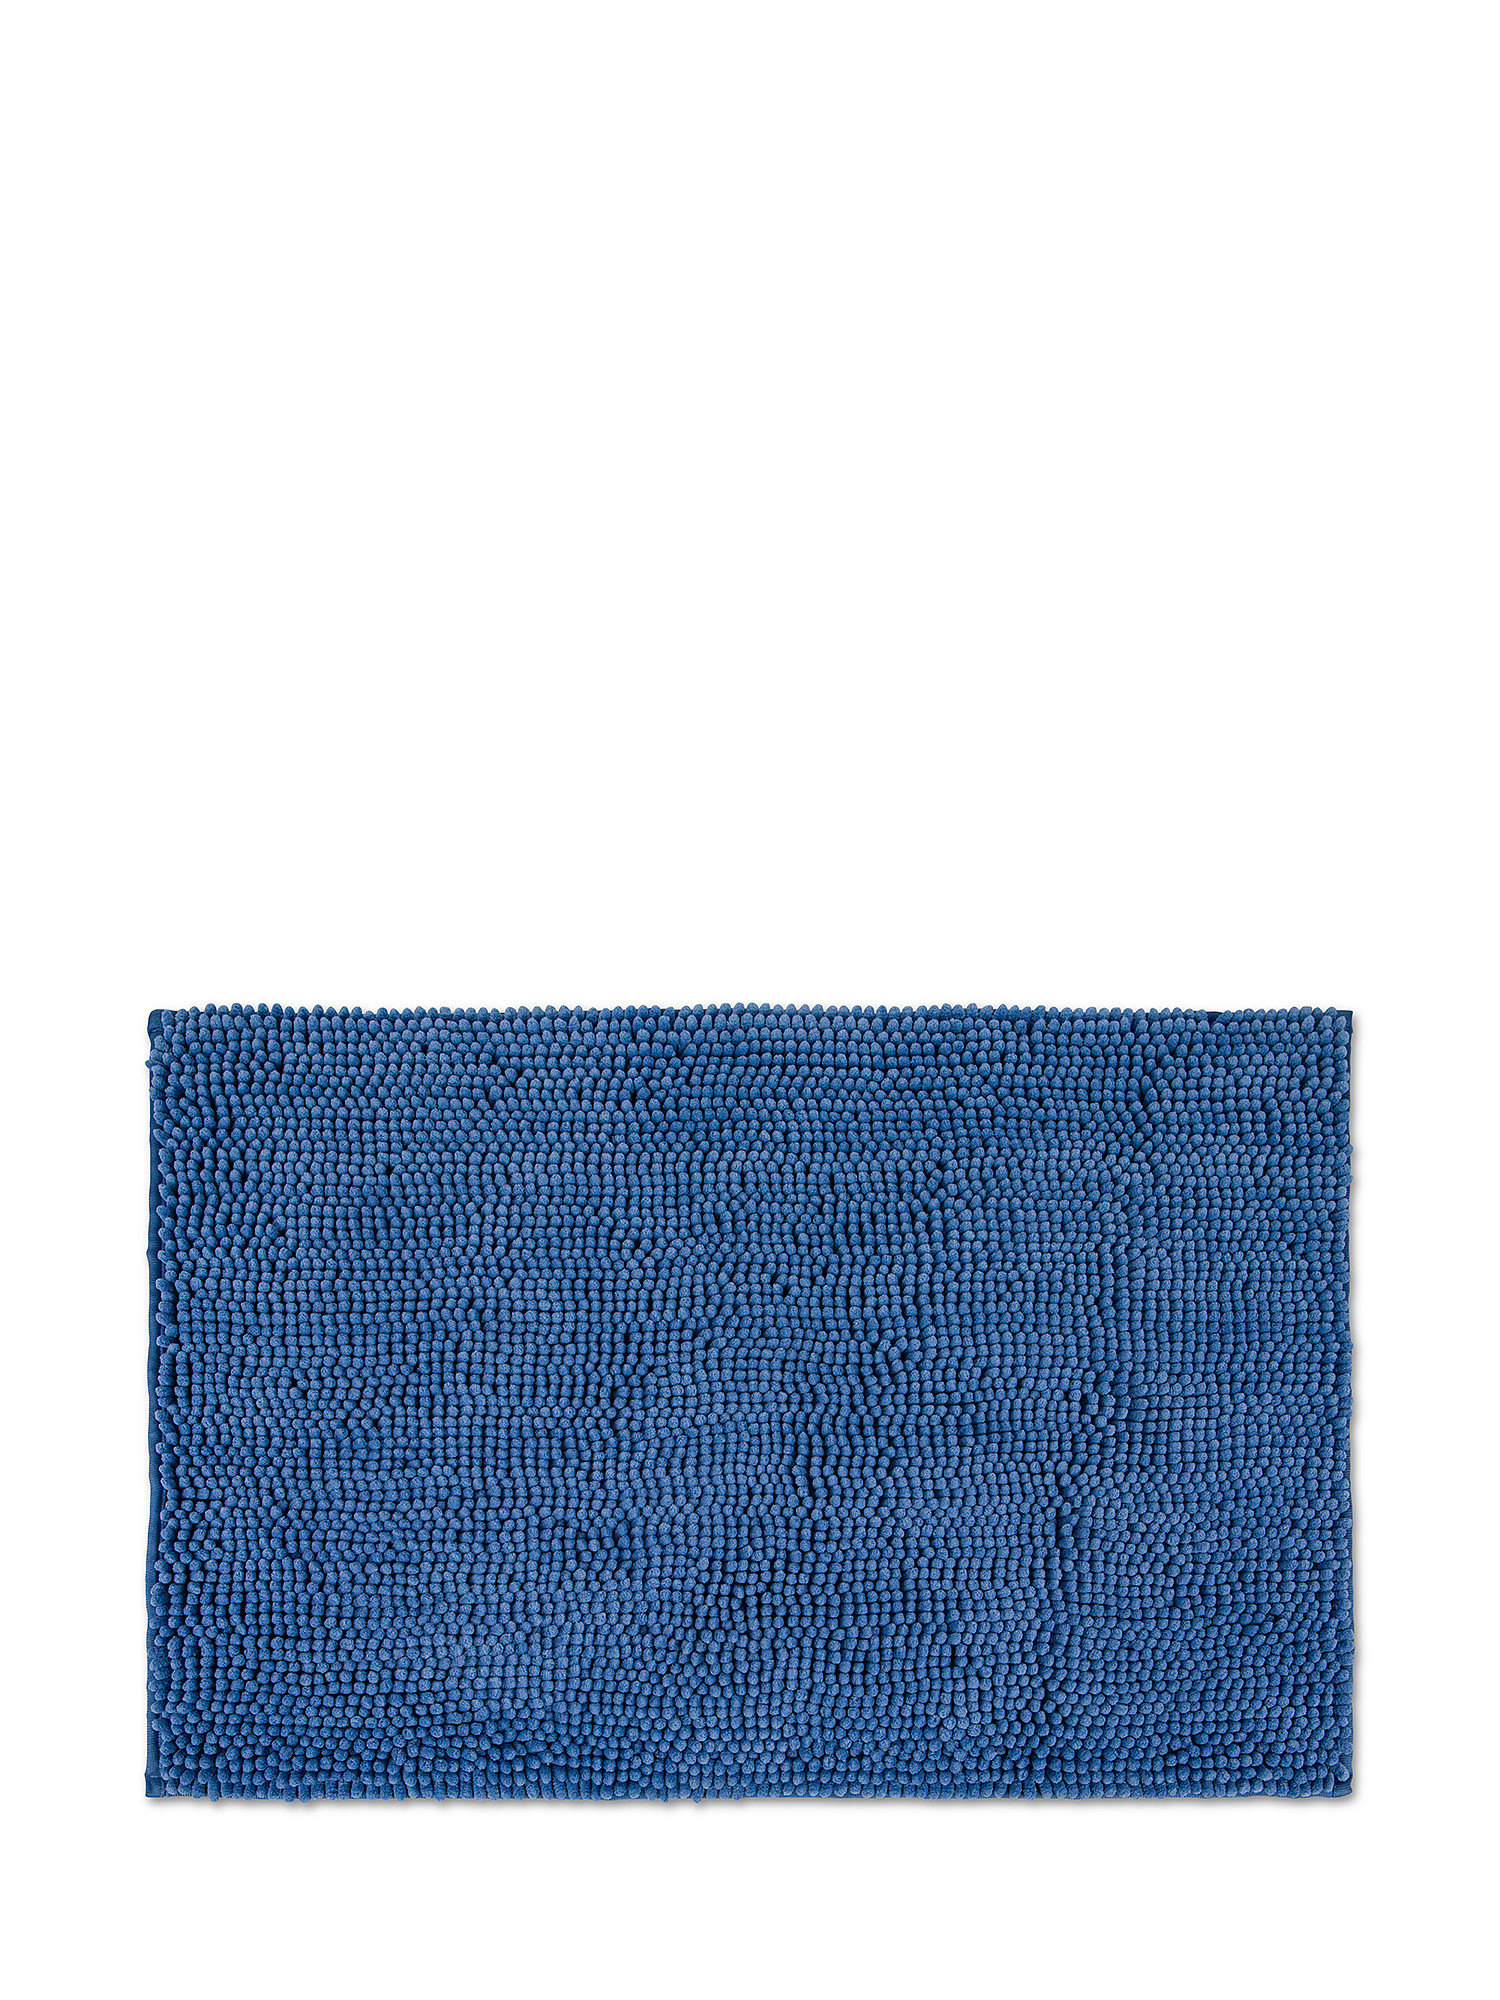 Zefiro solid color cotton bath rug, Light Blue, large image number 0